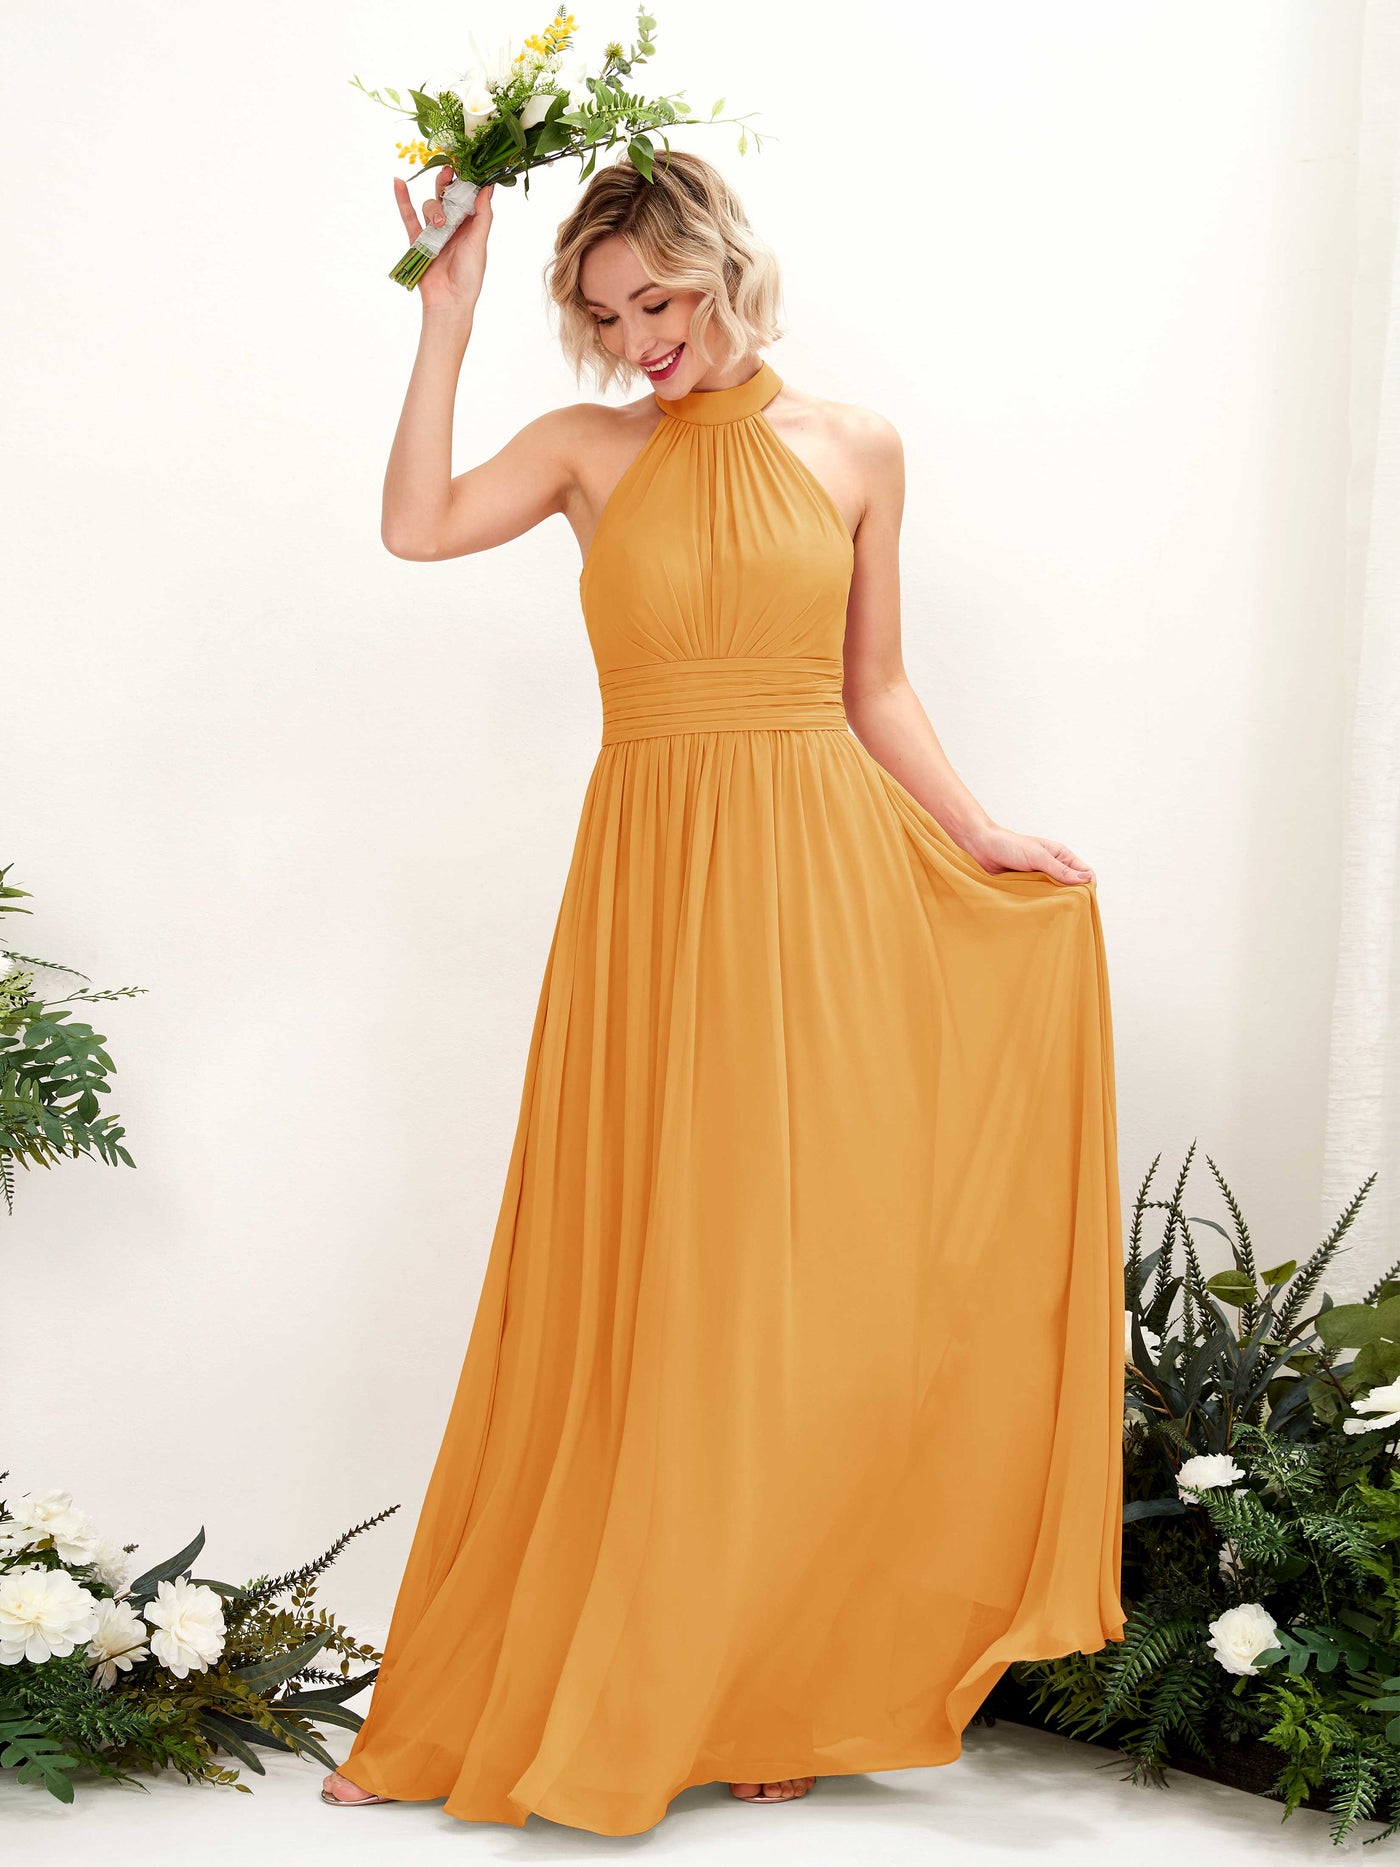 Mango Bridesmaid Dresses Bridesmaid Dress A-line Chiffon Halter Full Length Sleeveless Wedding Party Dress (81225302)#color_mango